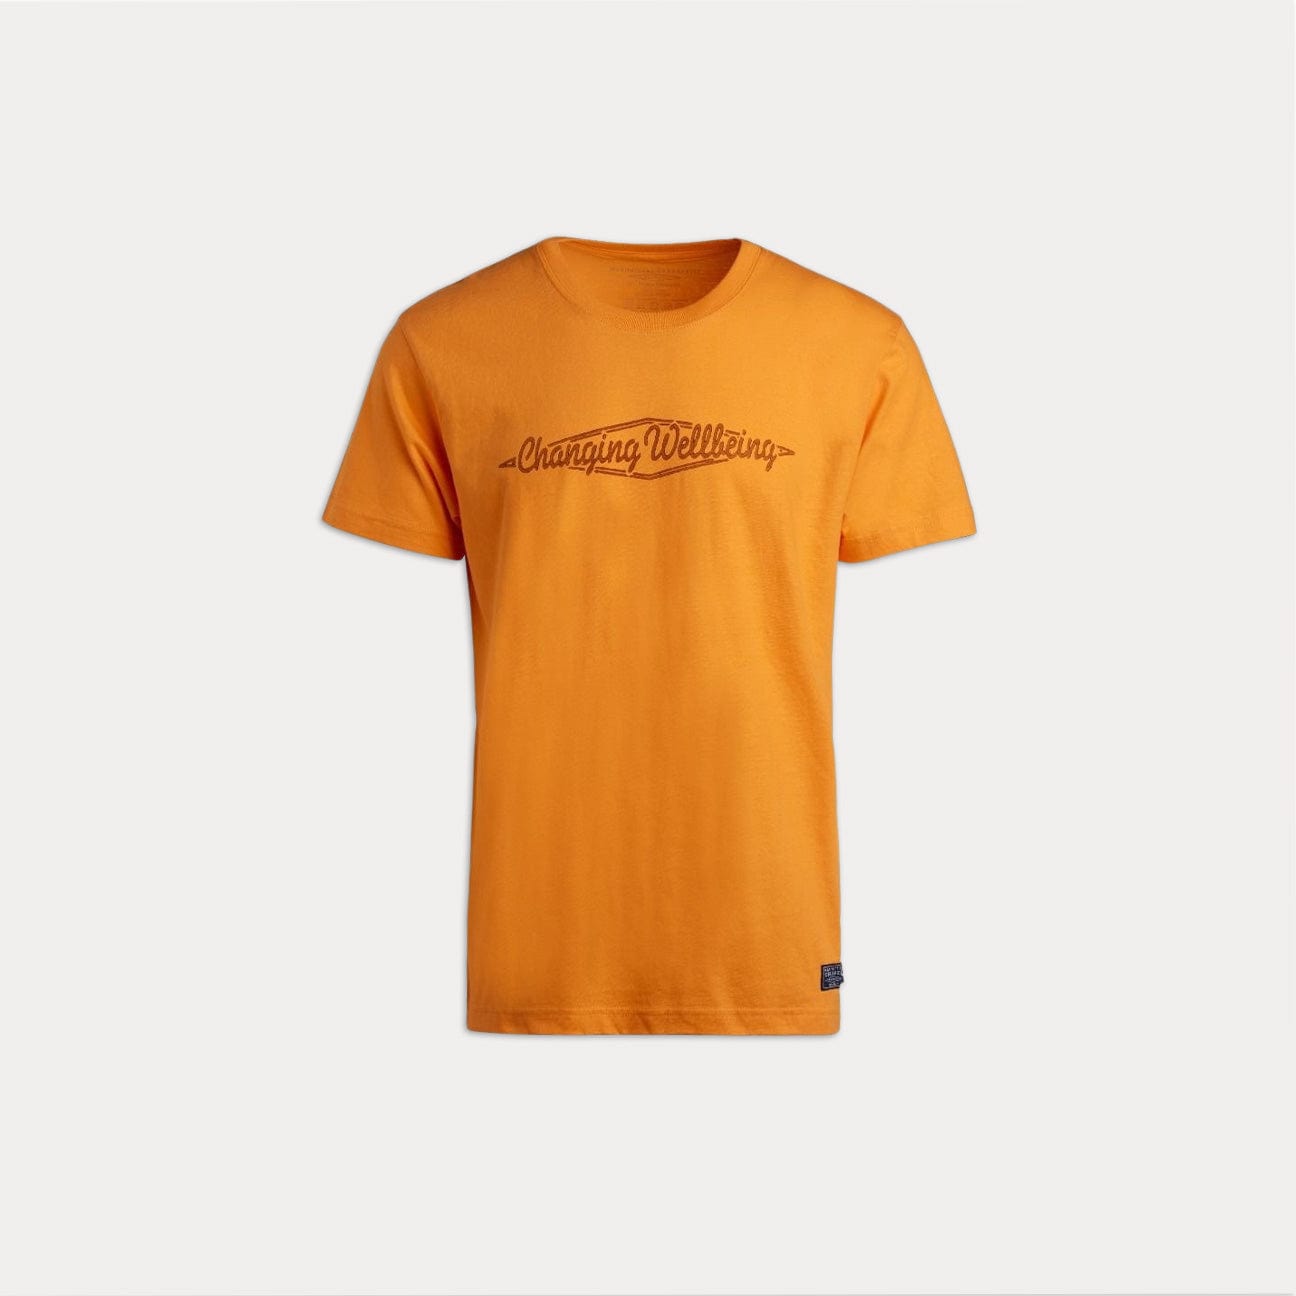 MANIFATTURA CECCARELLI T-Shirt Changing Wellbeing Arancio